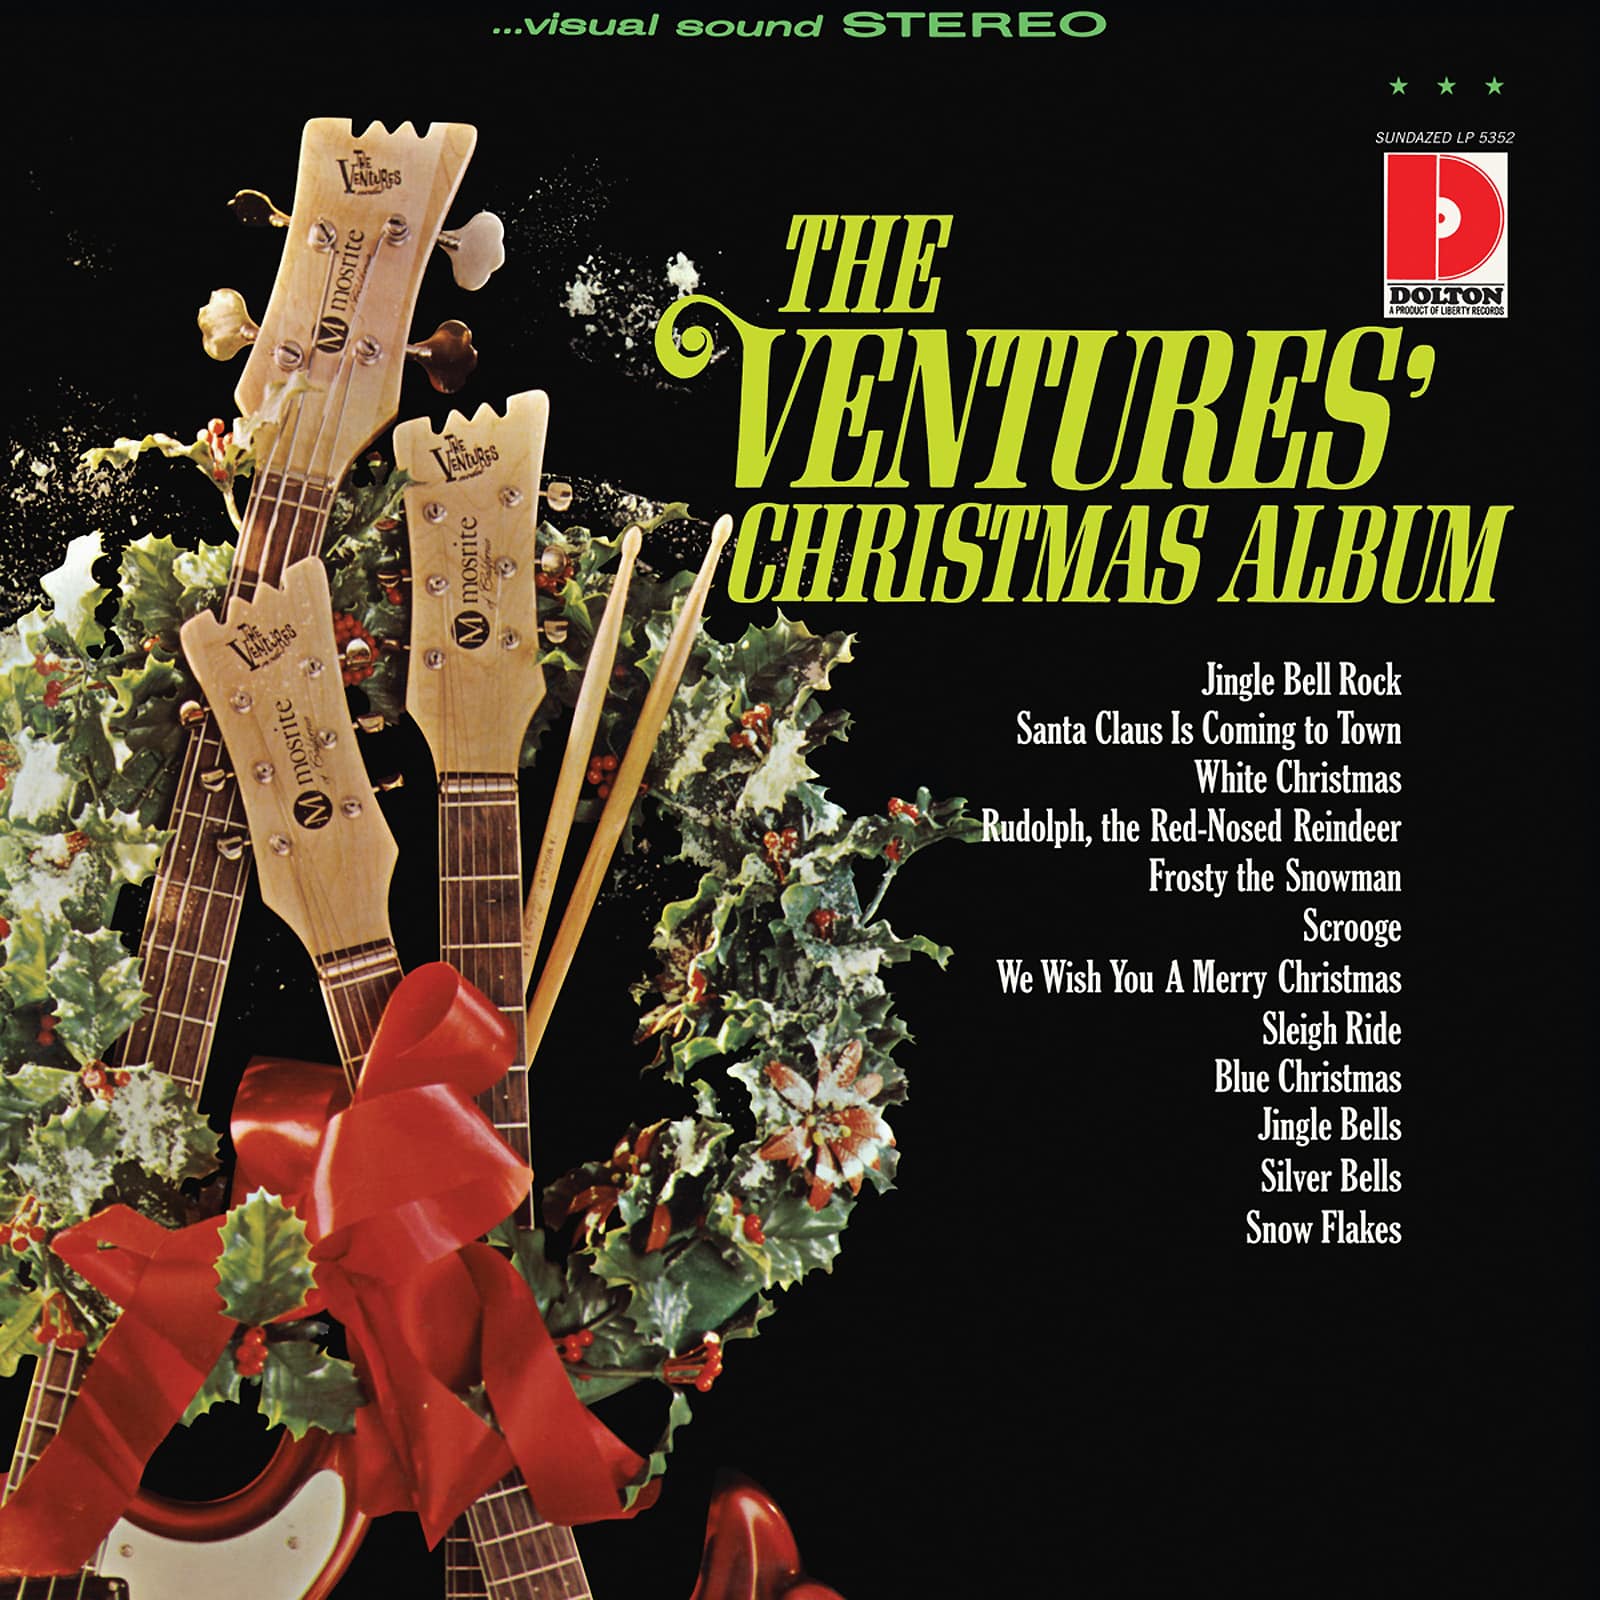 The Ventures’ Christmas Album